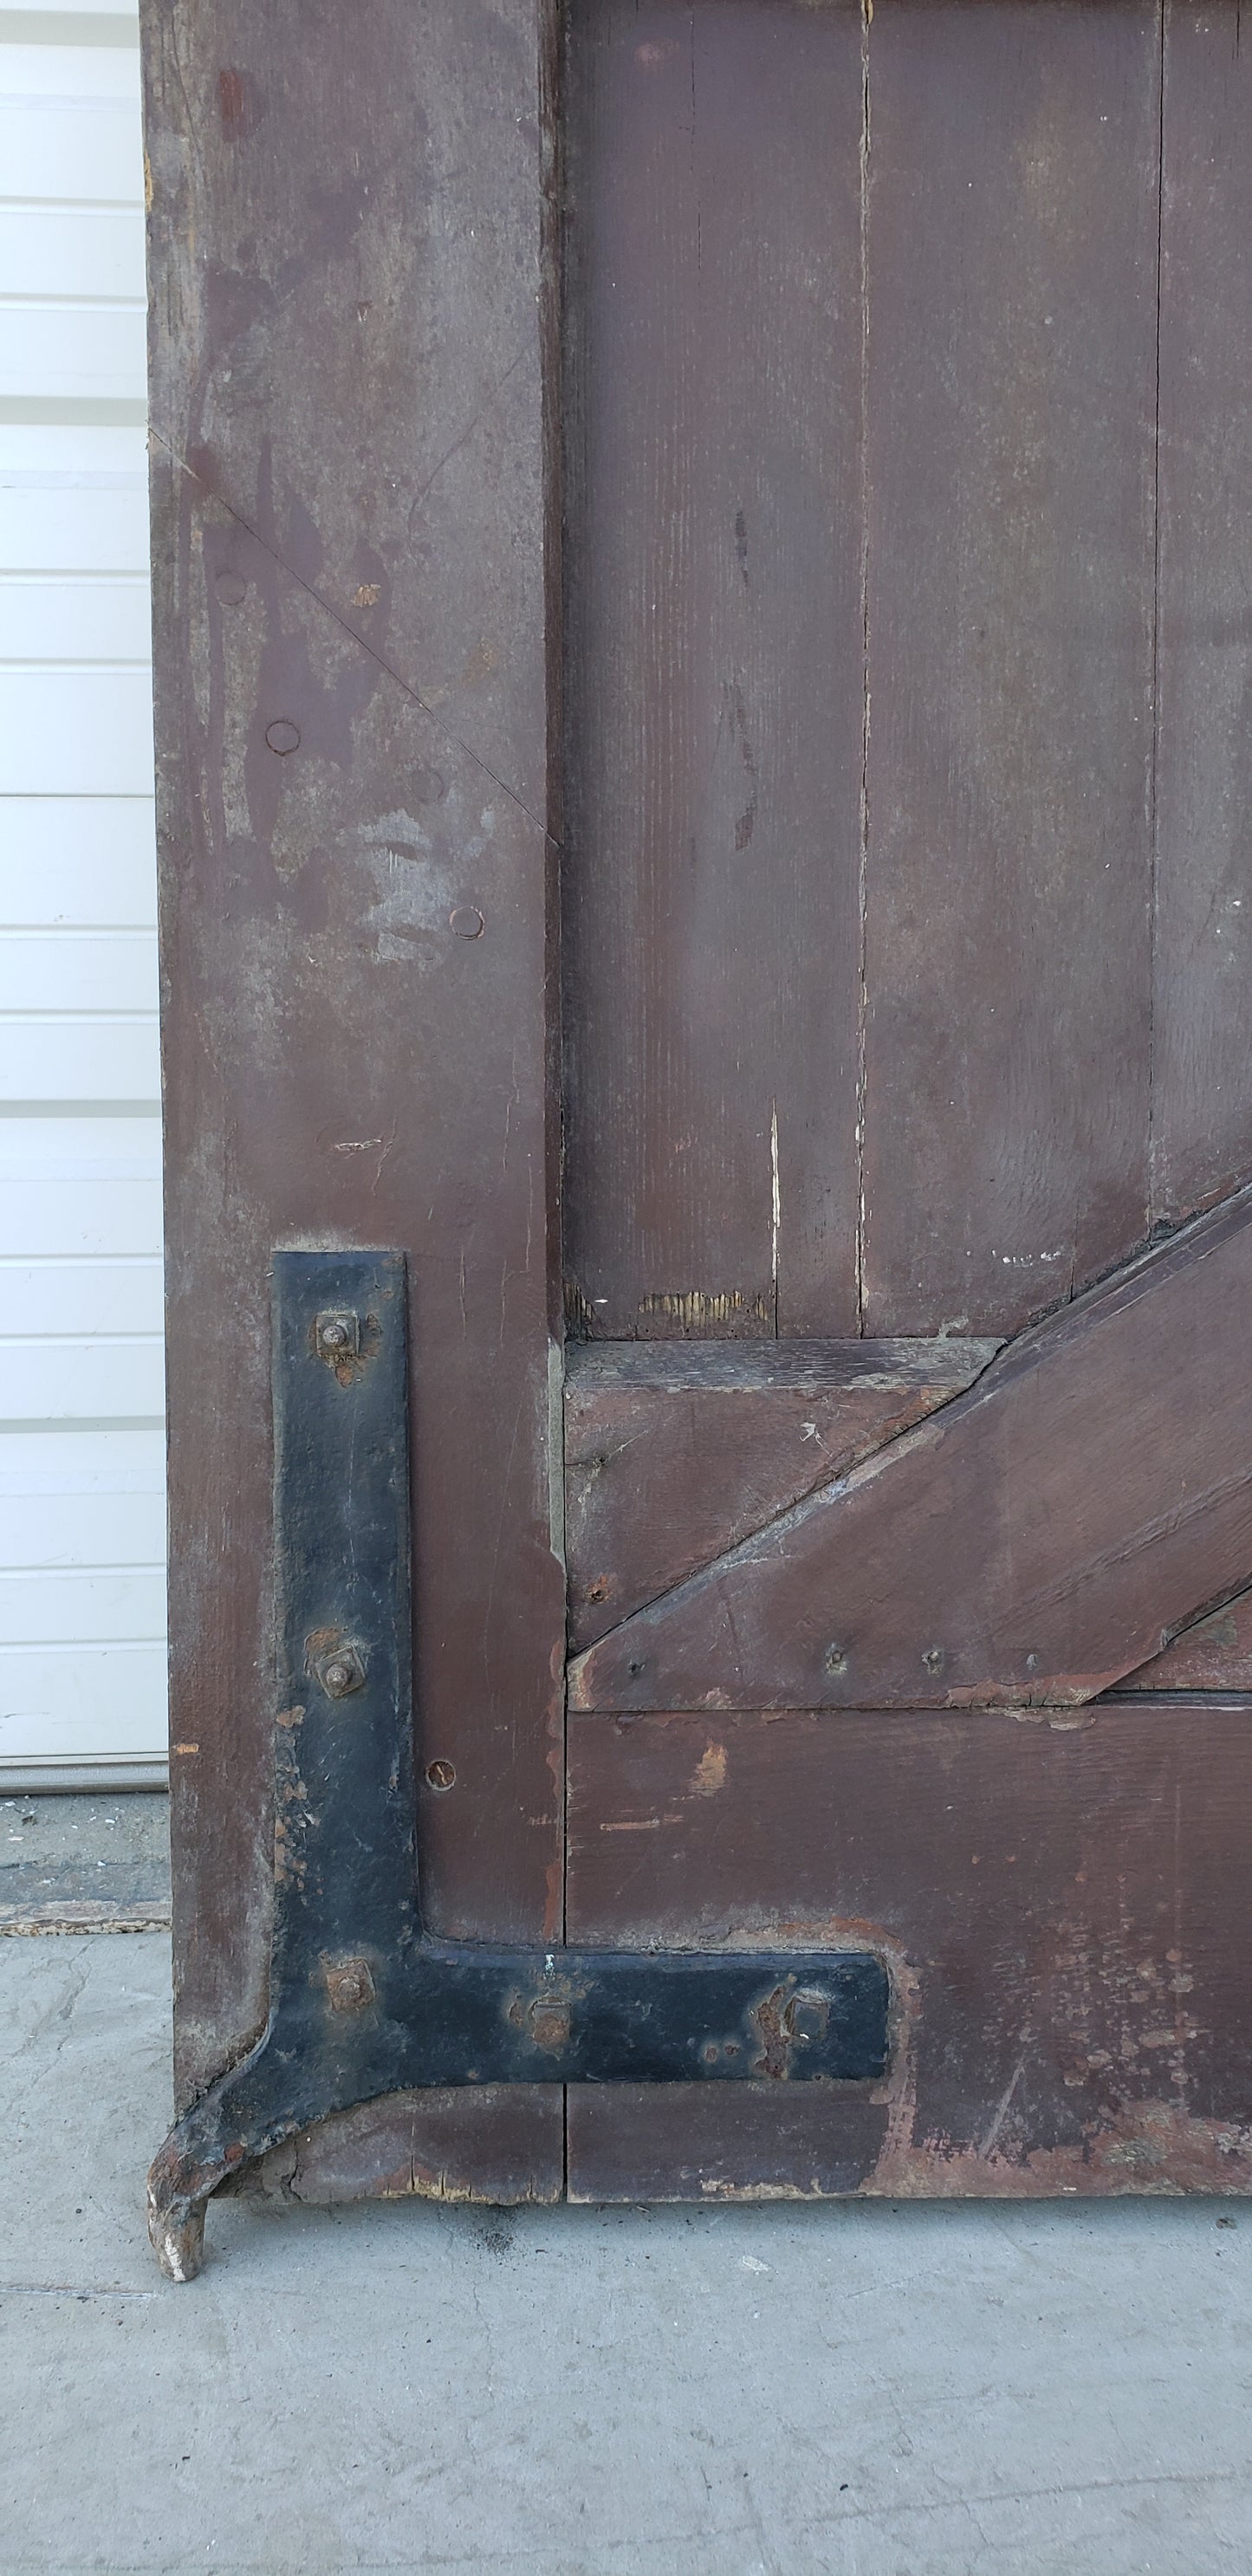 Pair of Large Antique European Barn Doors